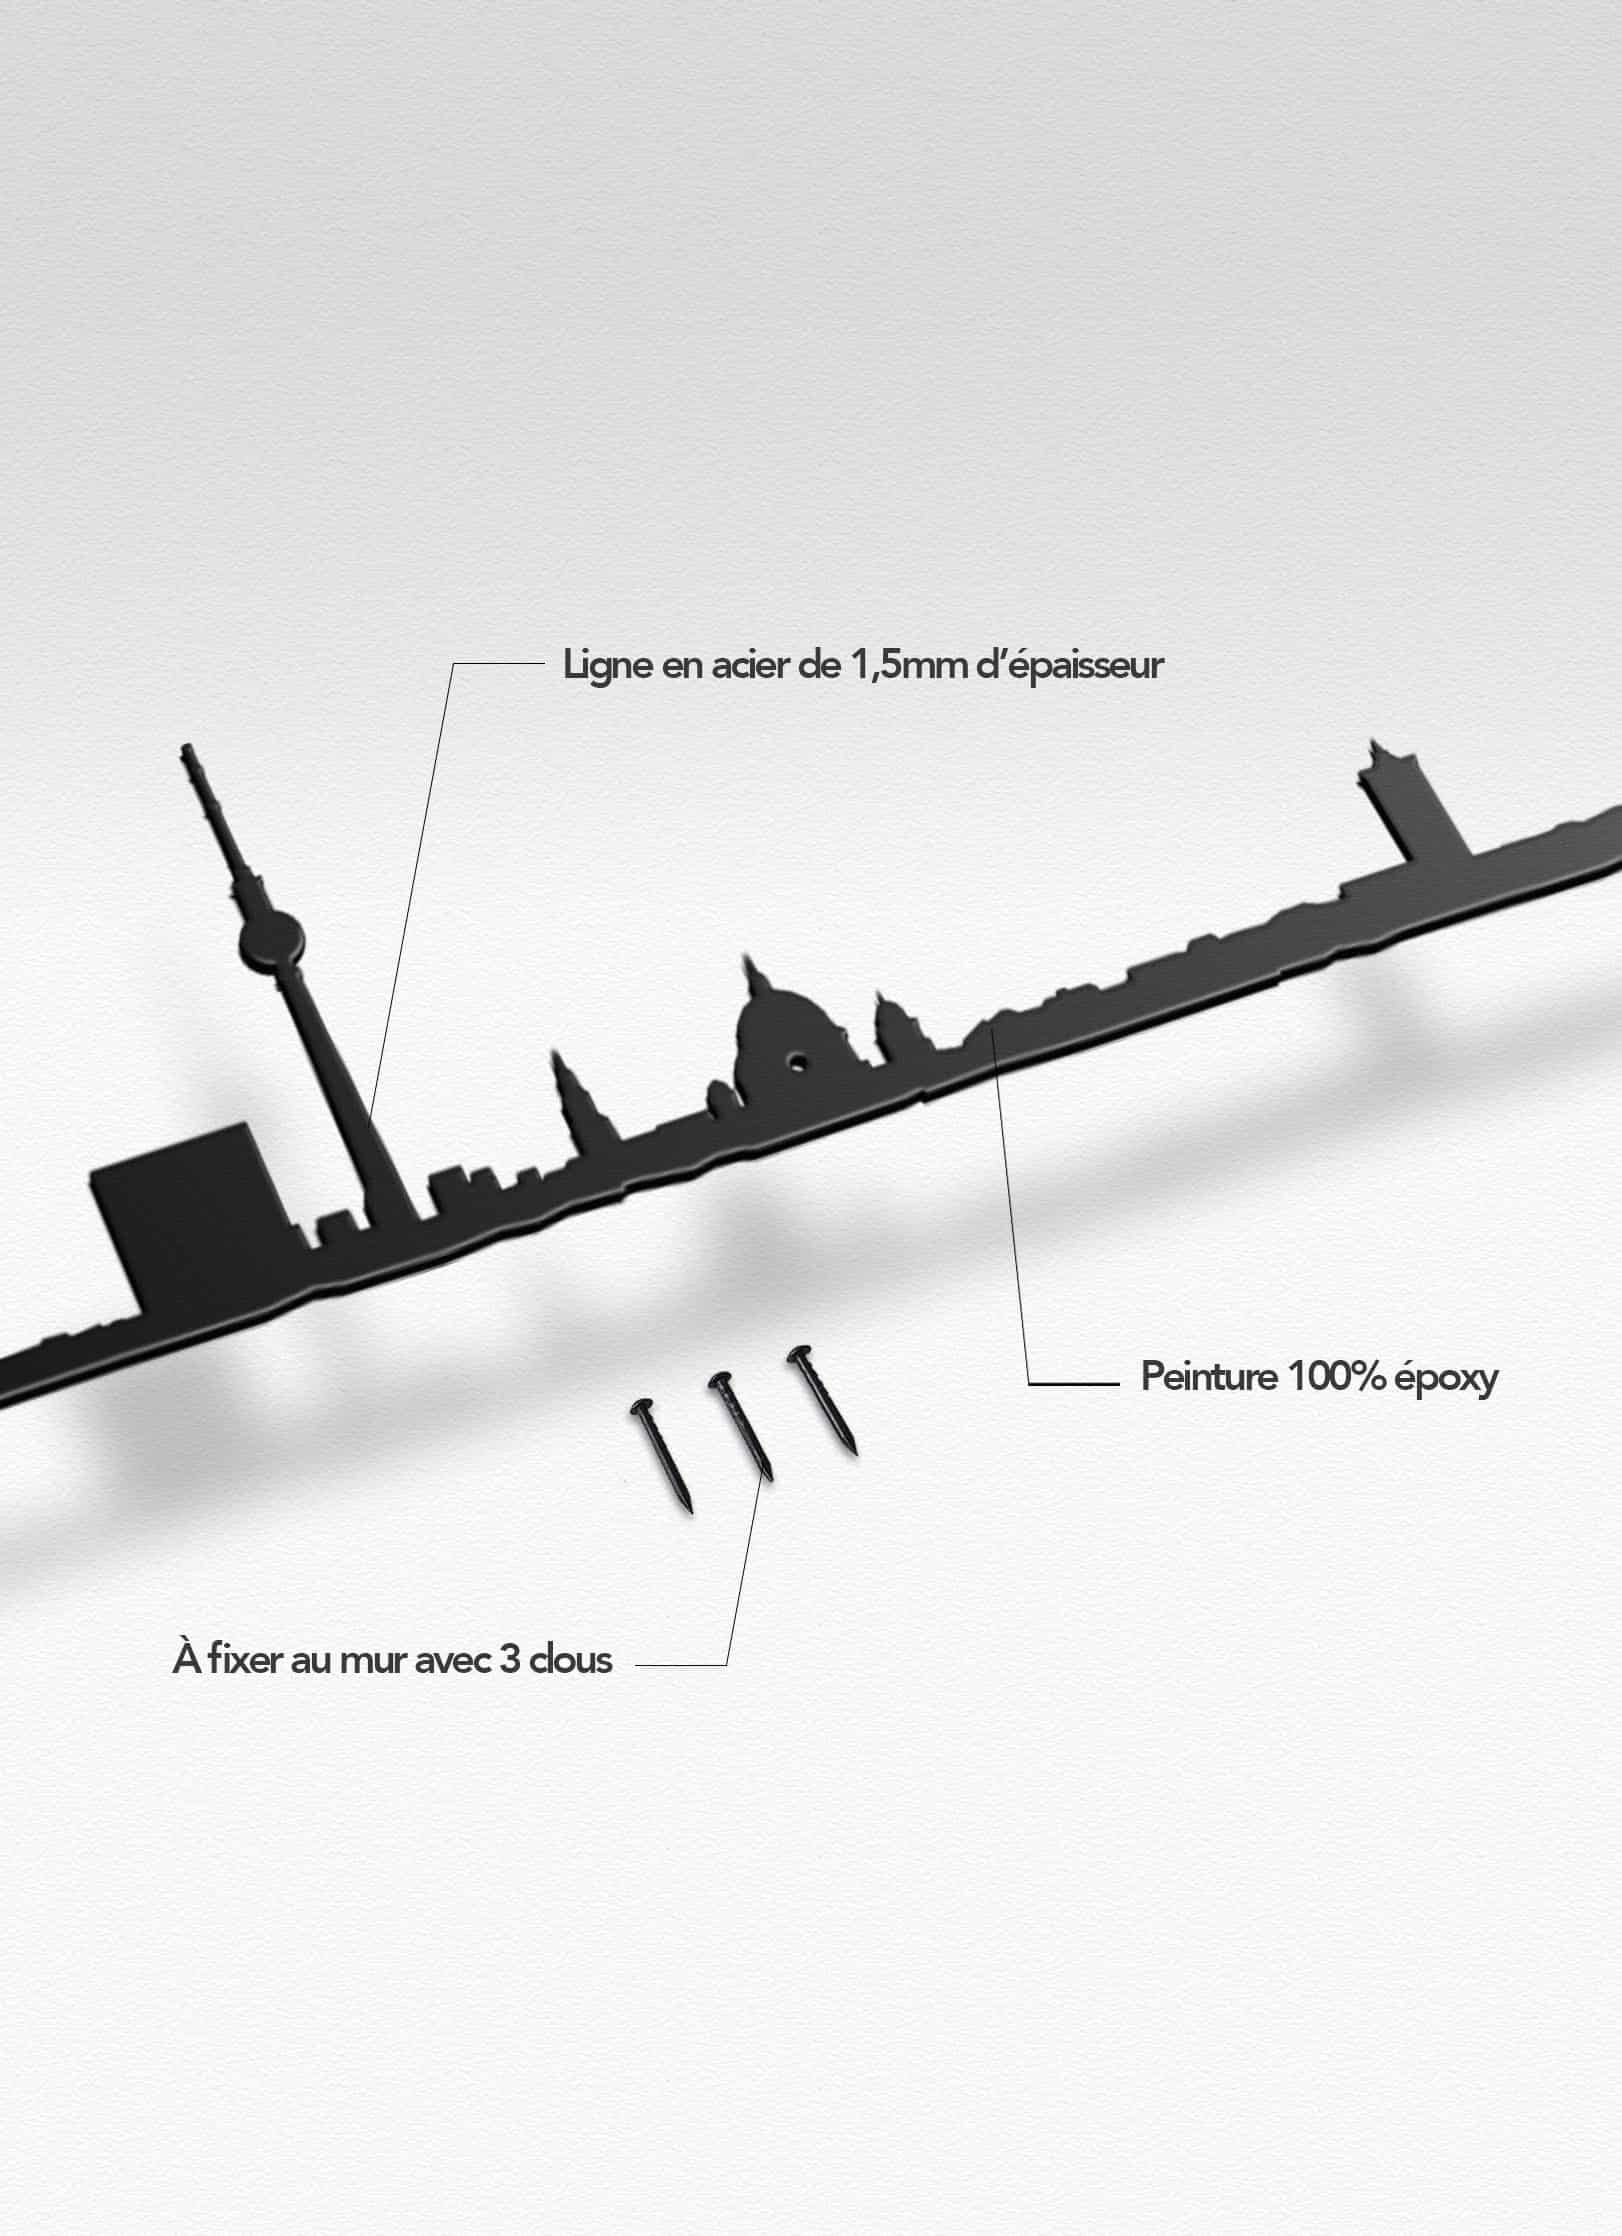 Presentation of the skyline of Berlin